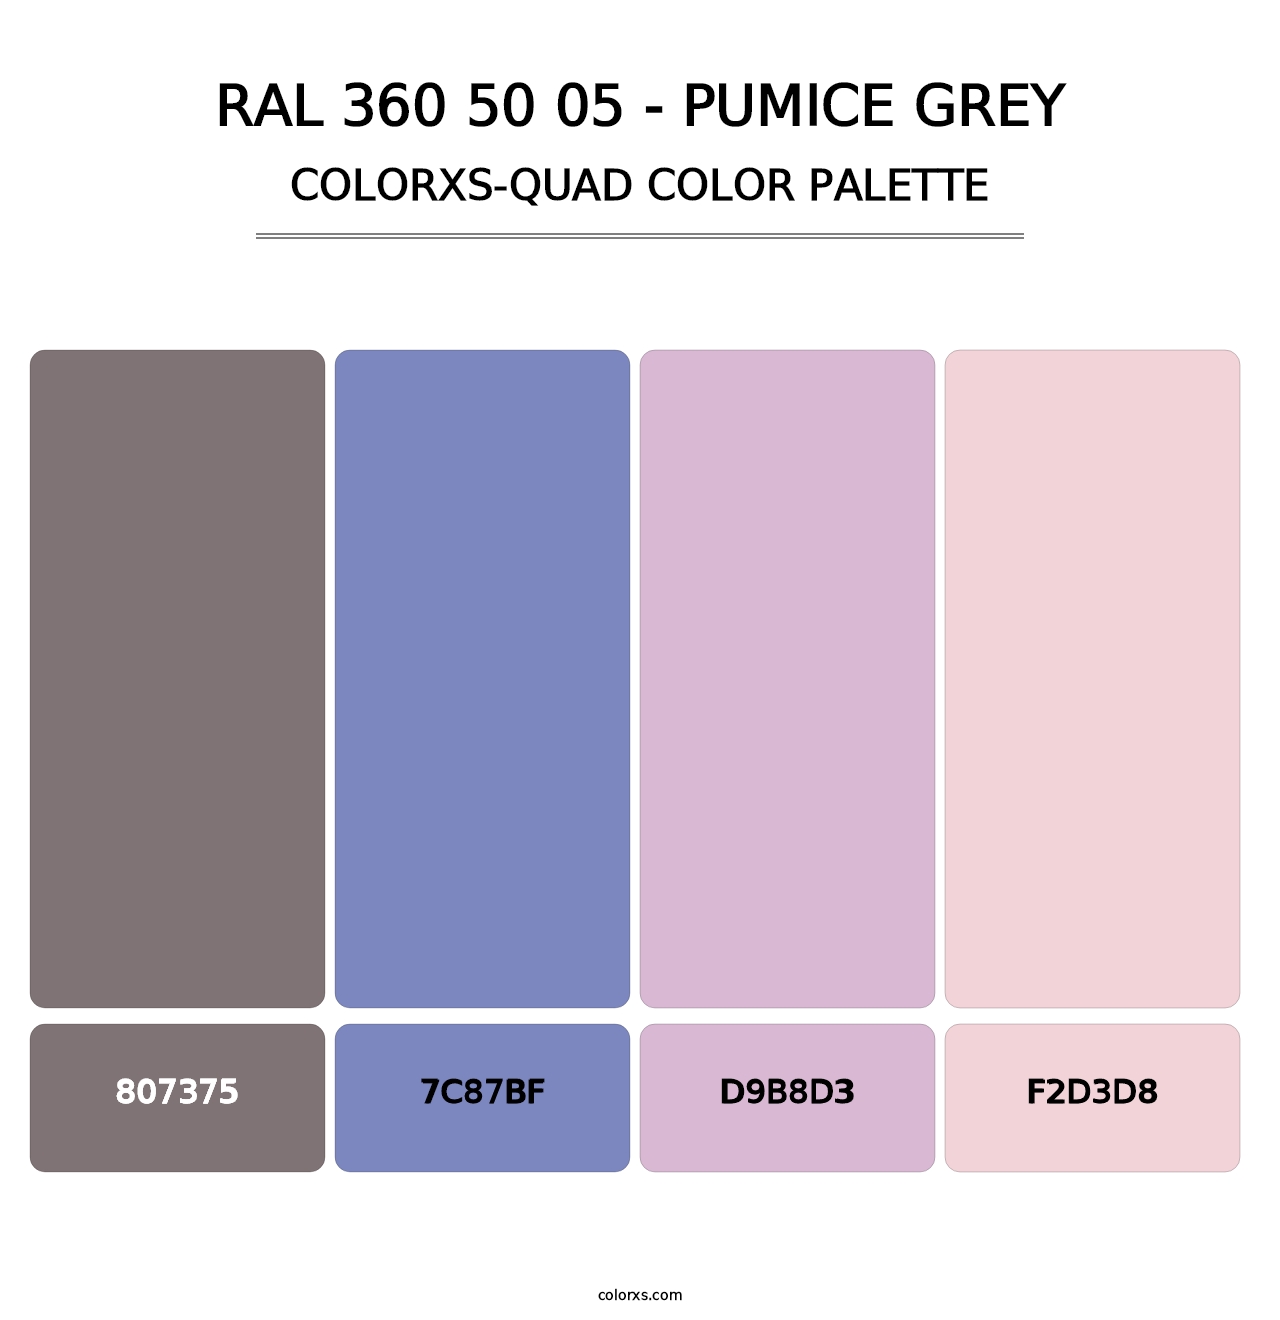 RAL 360 50 05 - Pumice Grey - Colorxs Quad Palette